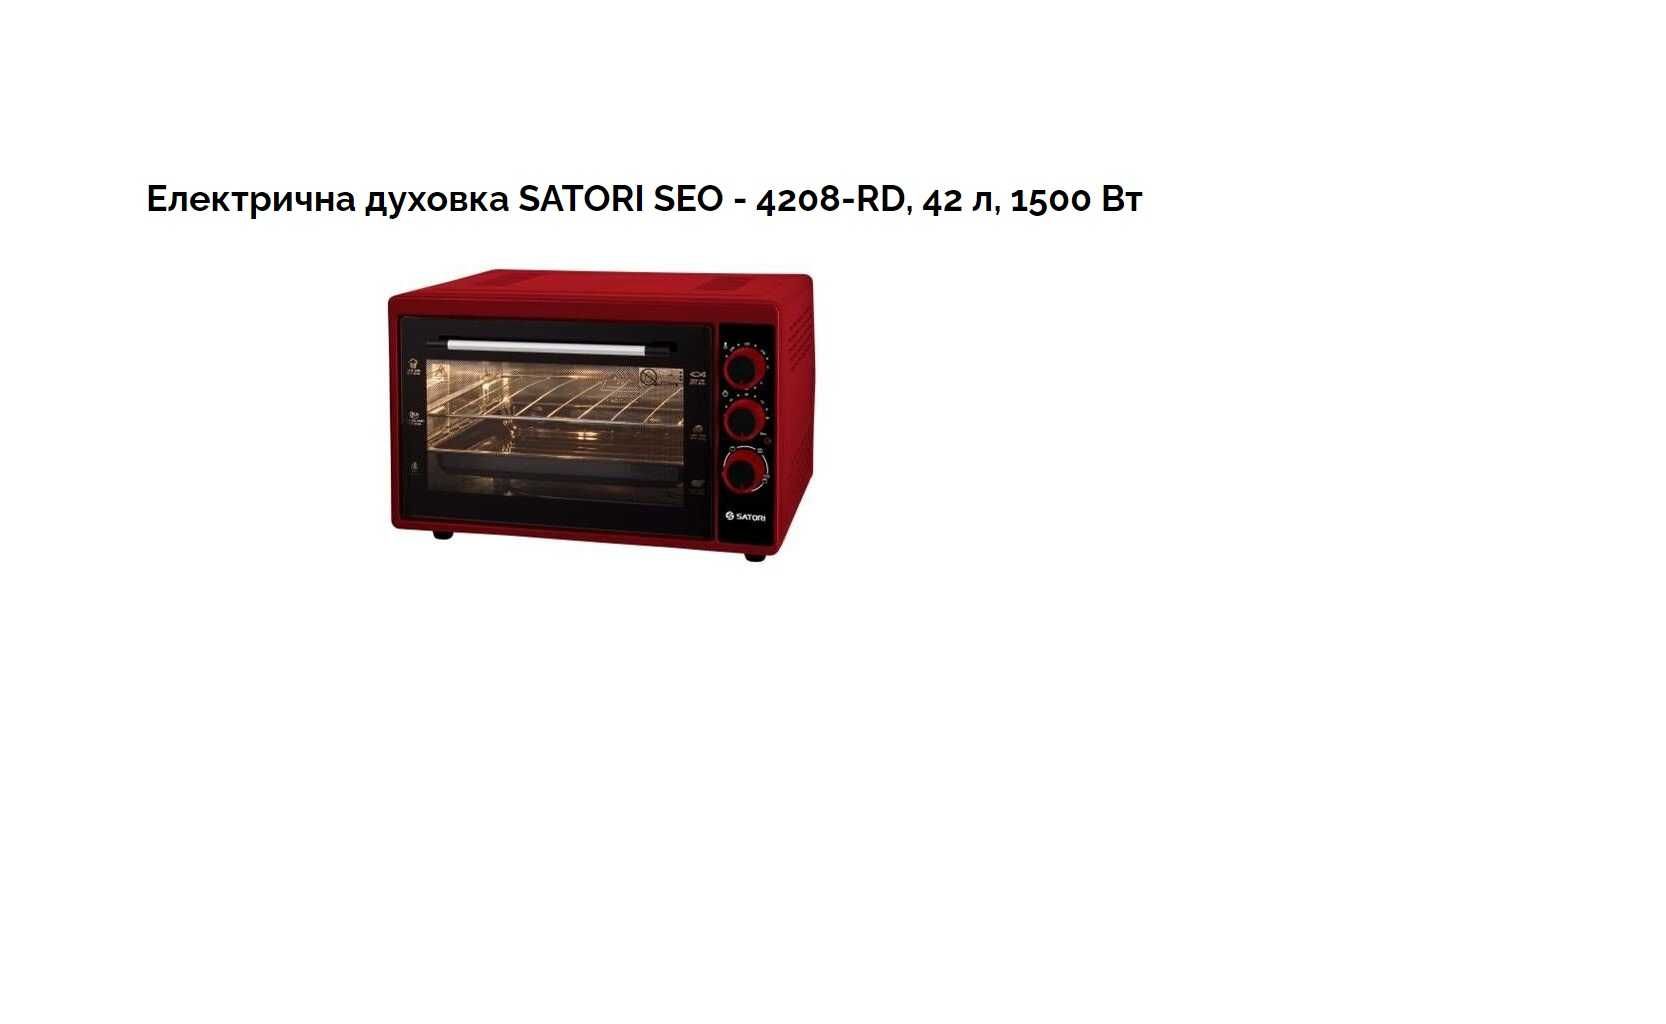 Продам нову Електричну духовку SATORI SEO-4208-RD